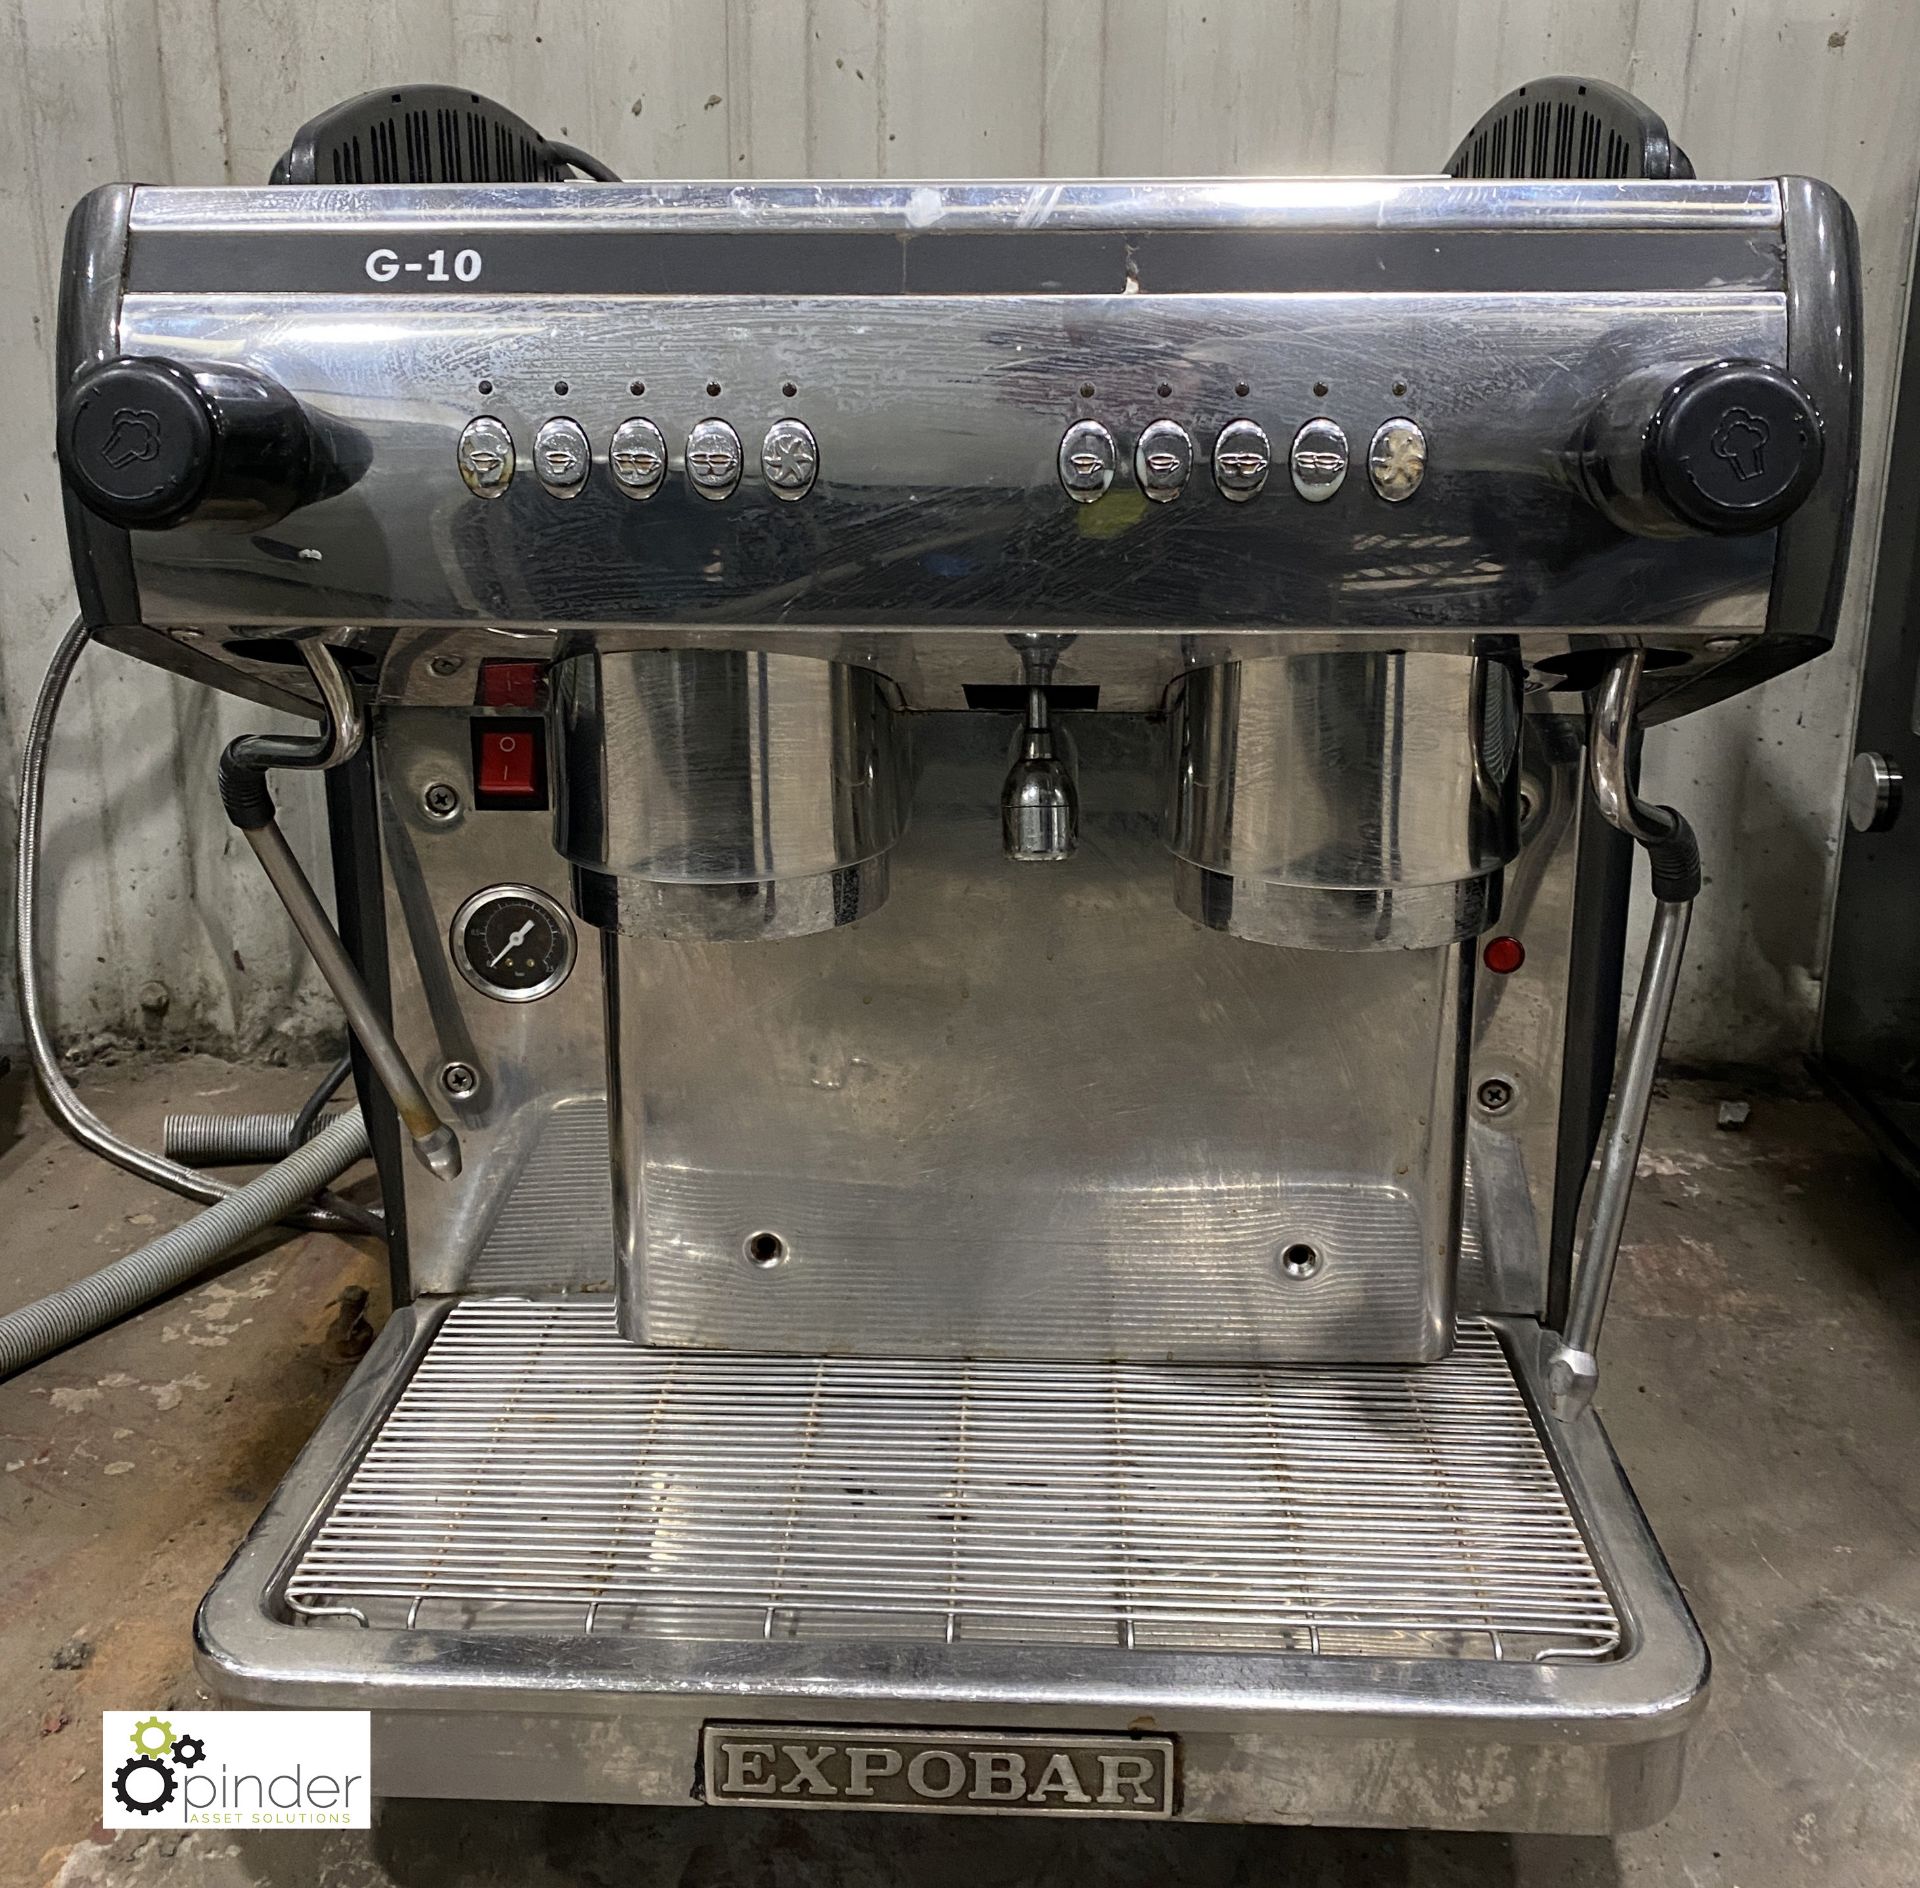 Rijo Expobar G10 Processional 2-cup Espresso Machine, 240volts